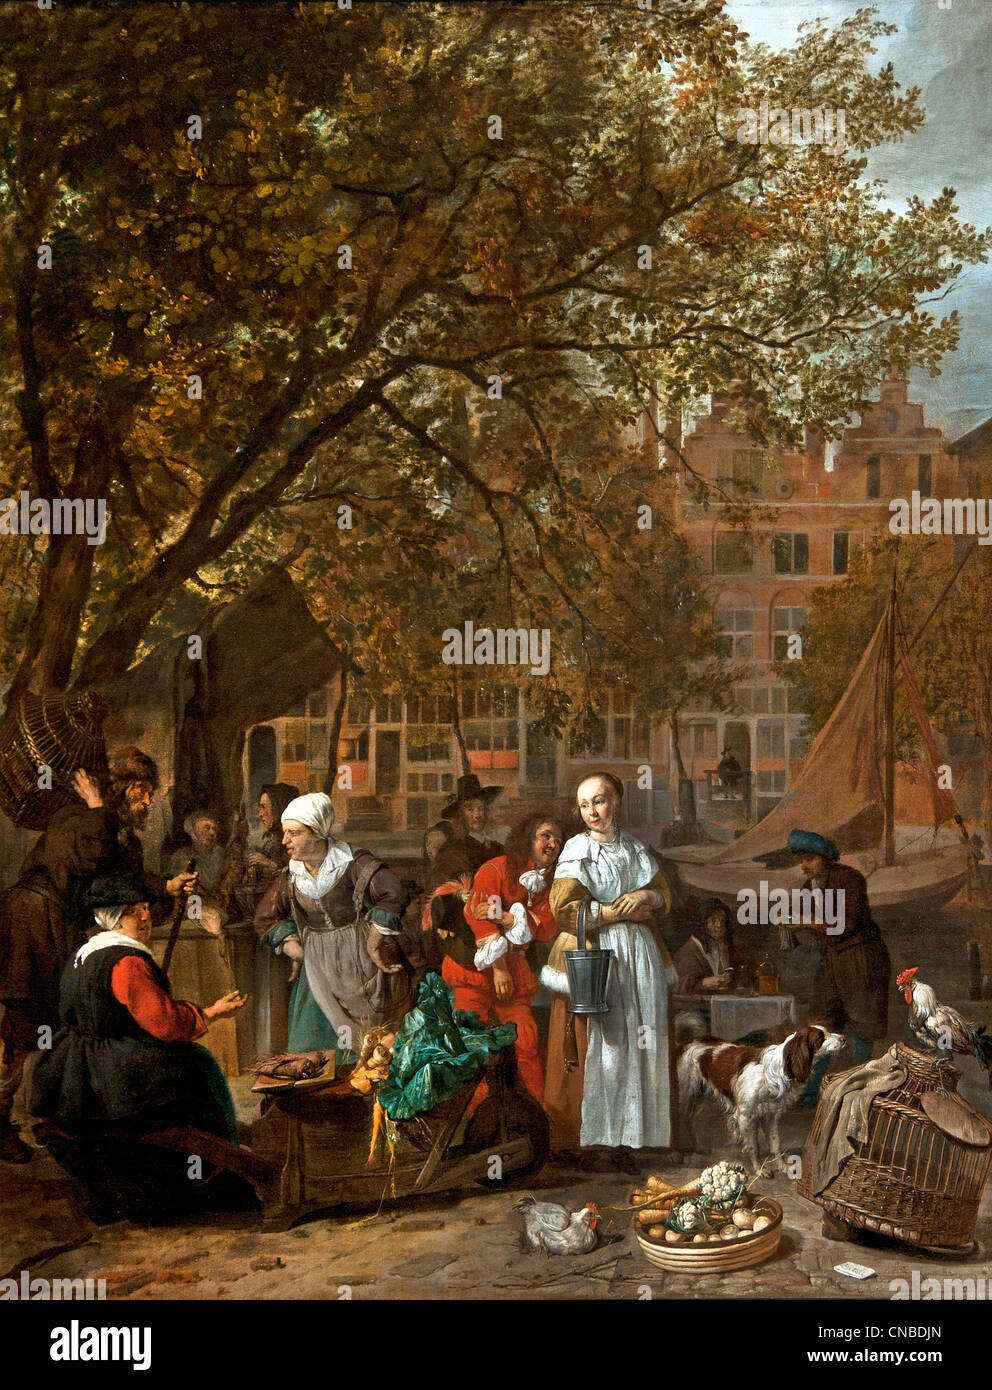 On the herb or vegetable market of Amsterdam 1660 Gabriel METSU 1629 - 1667 Dutch Netherlands Stock Photo